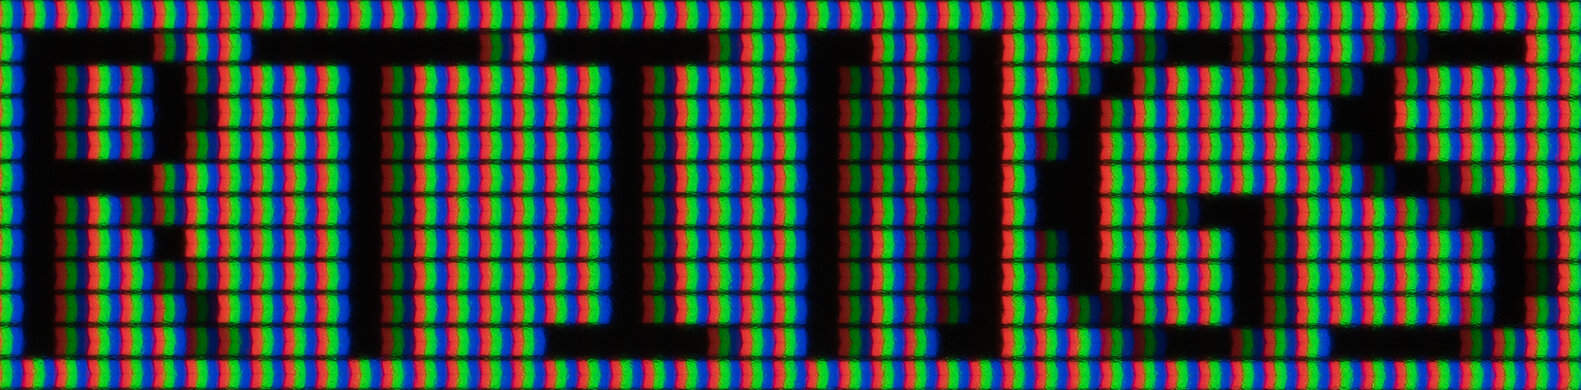 Philips Momentum 436M6VBPAB Pixel